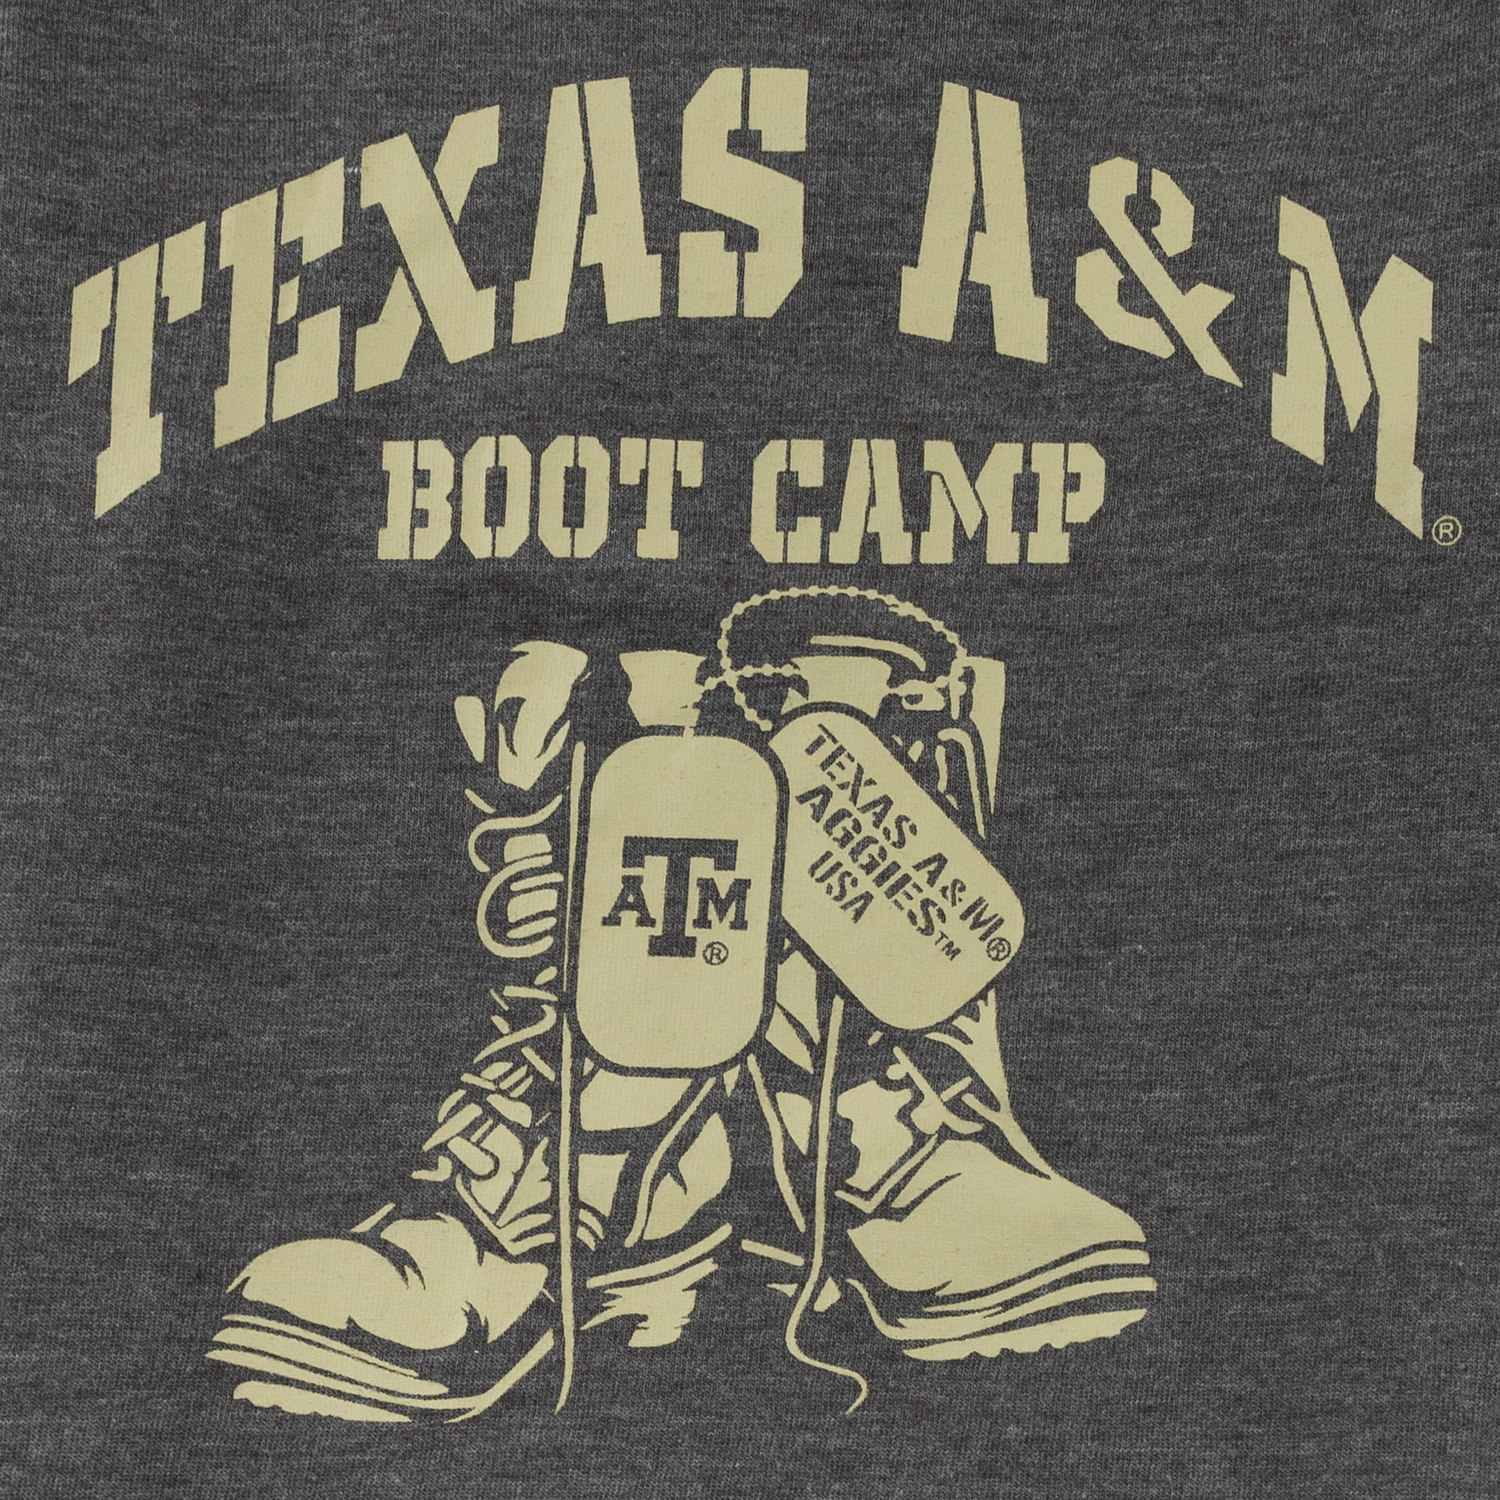 Texas A&M Toddler Boot Camp Tee